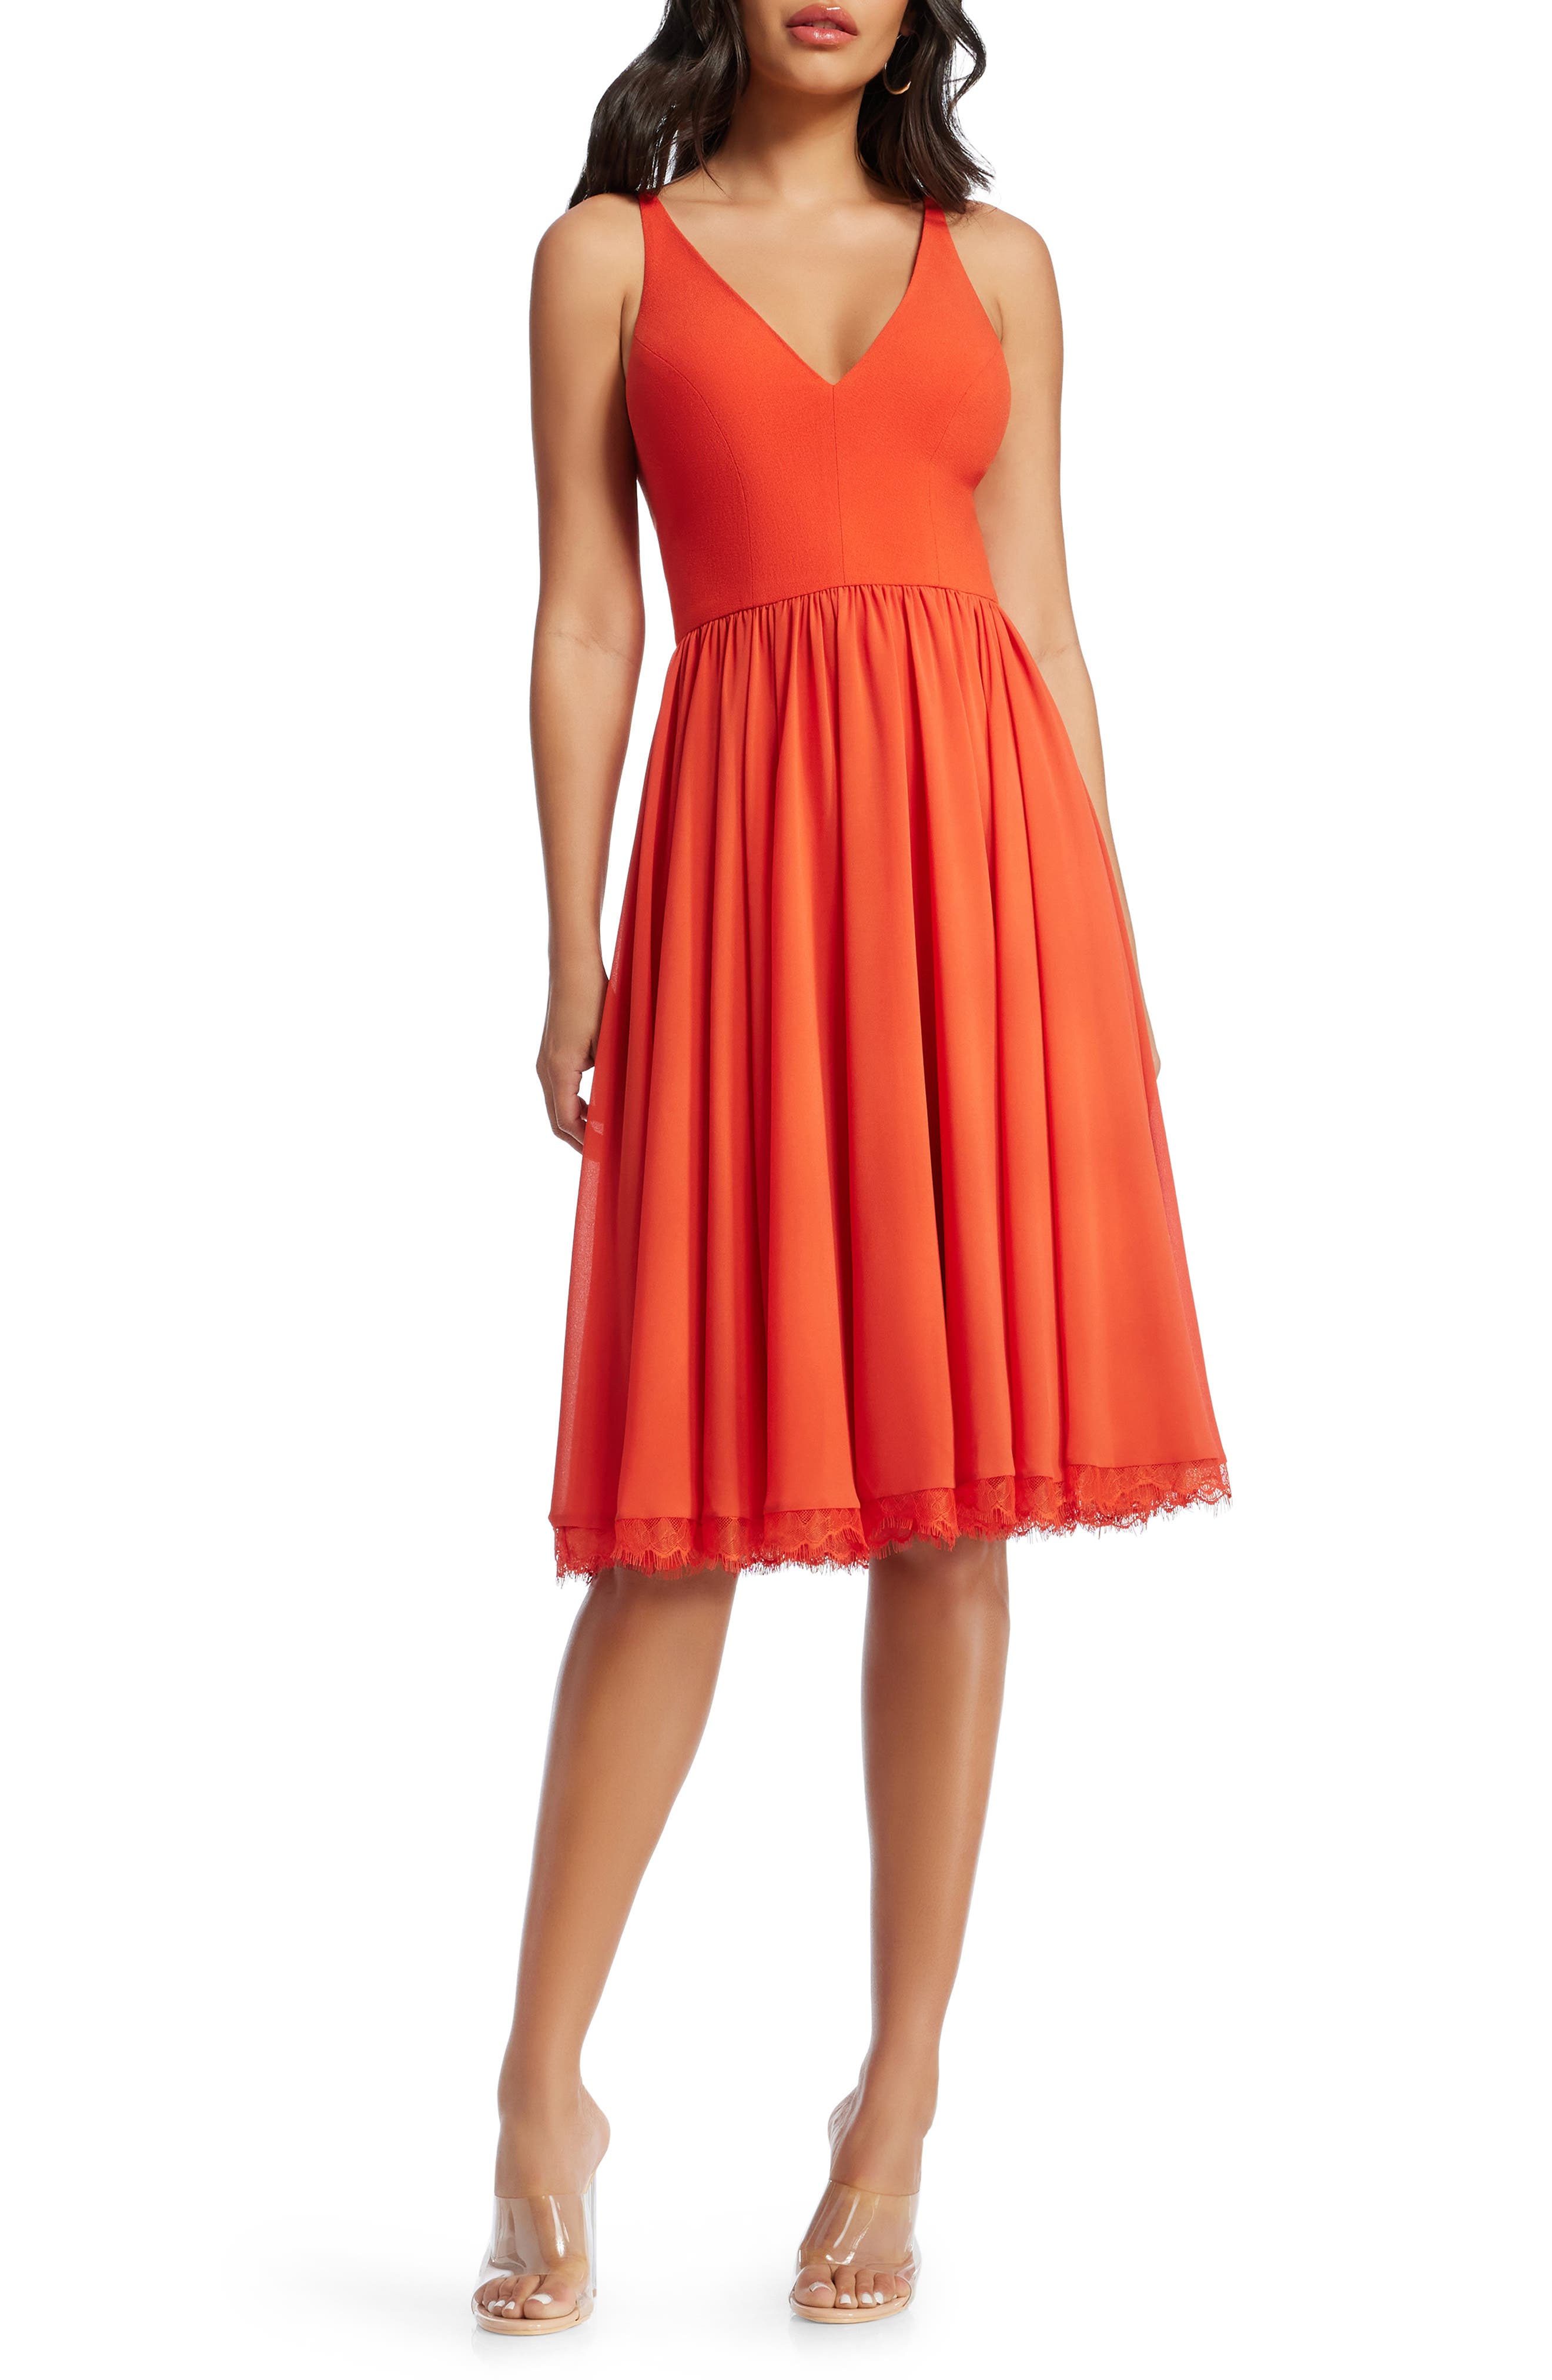 orange party dress